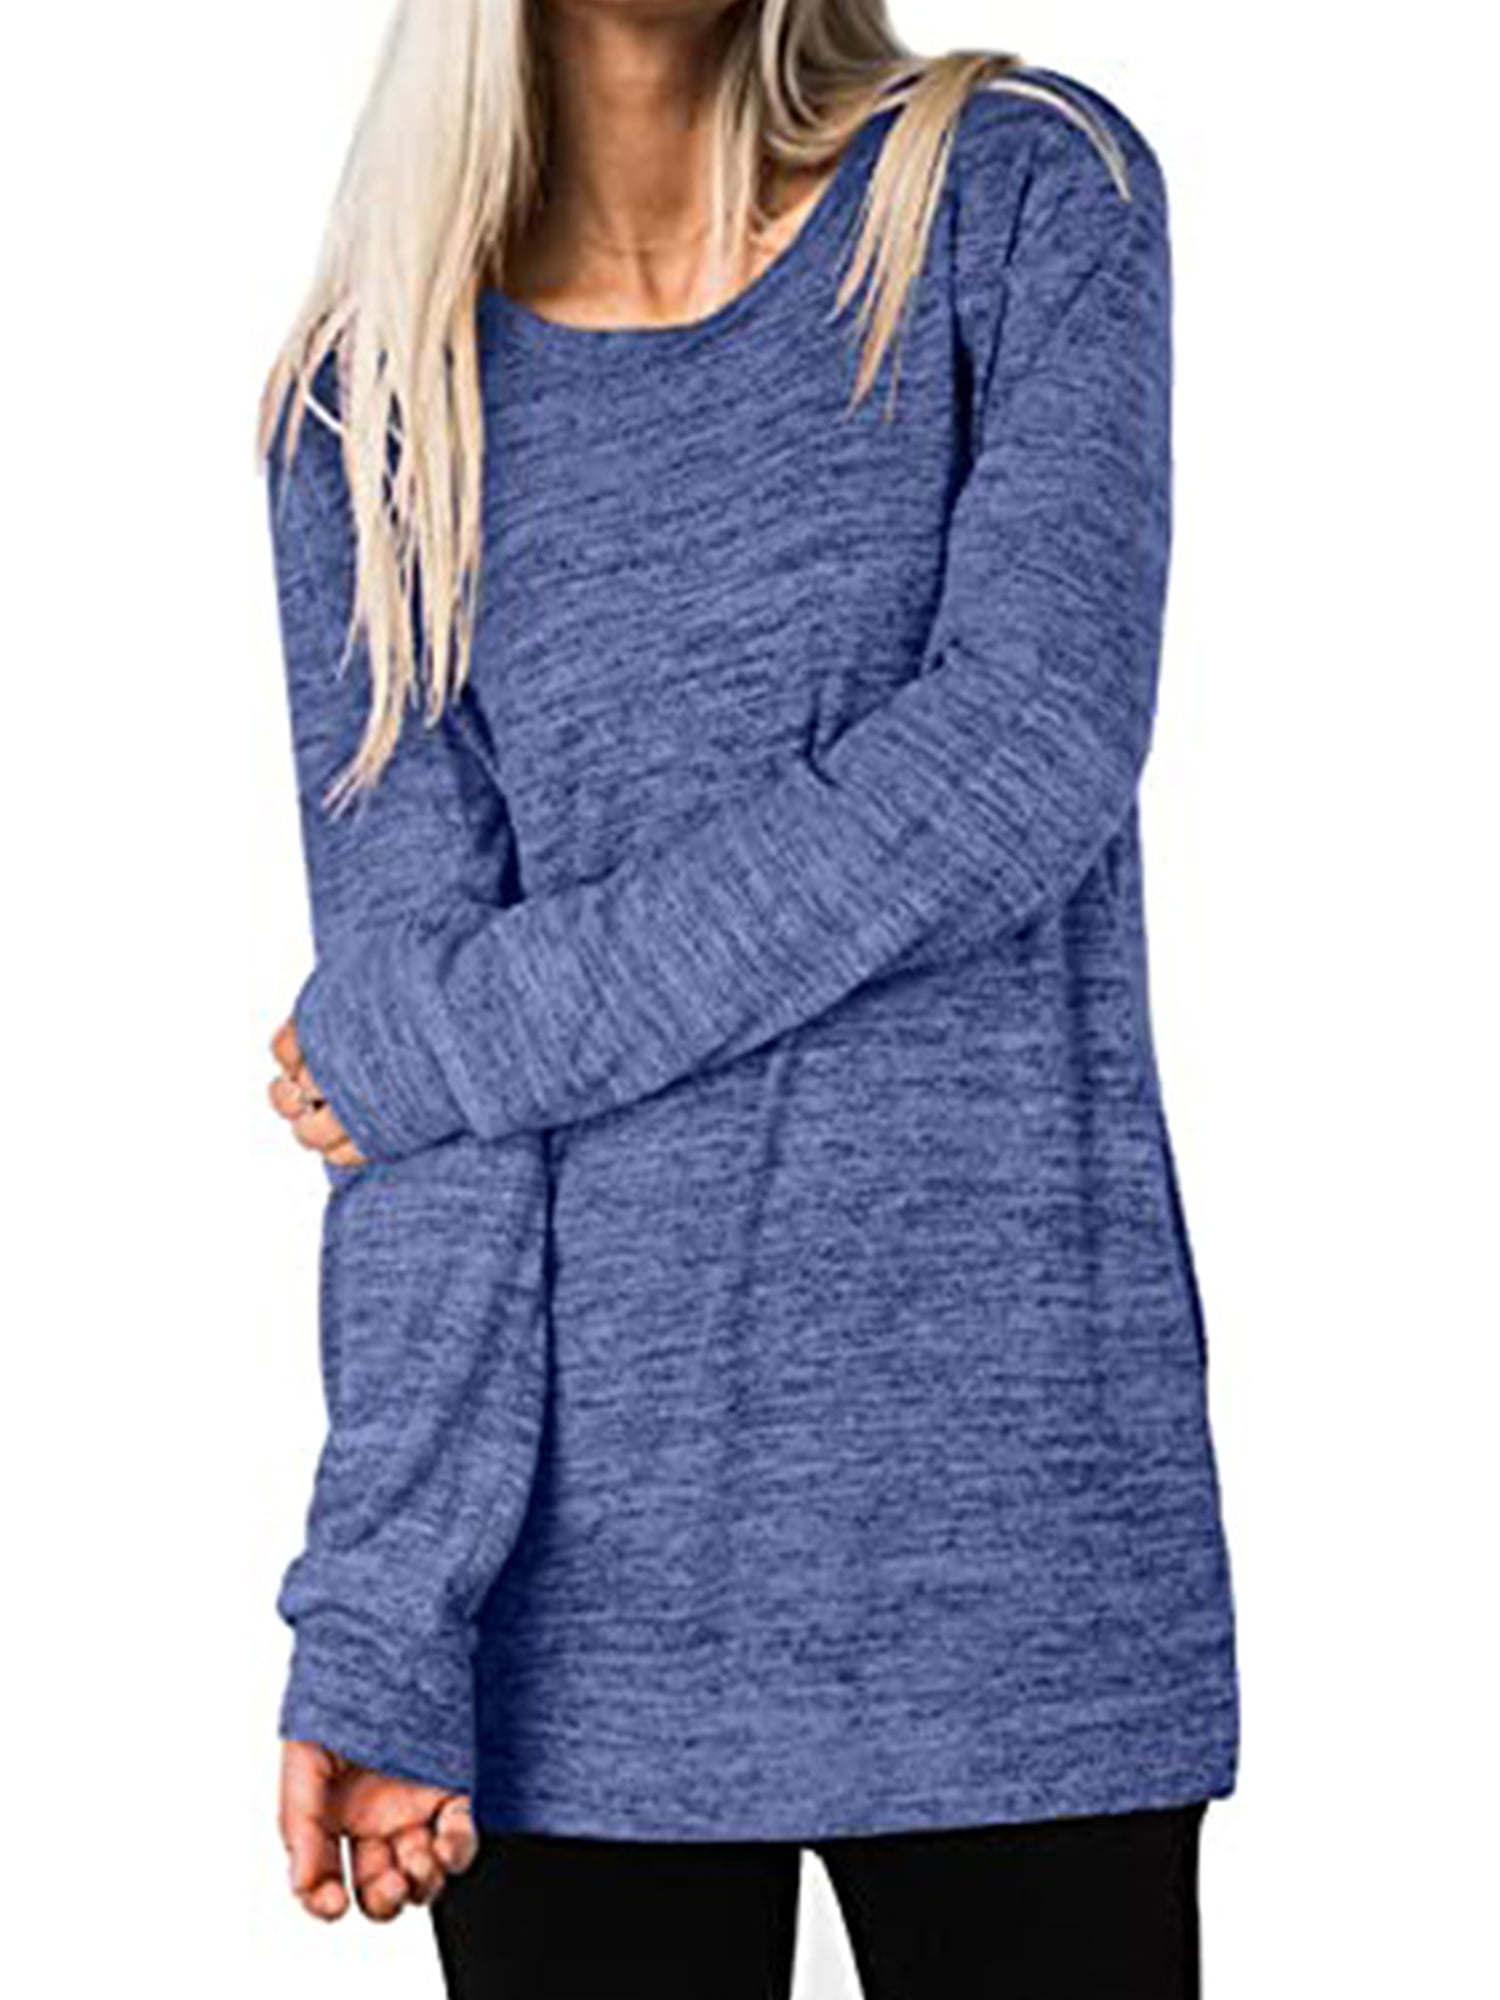 Roselux Women's Crewneck Raglan Long Sleeves Shirts Soft Comfy Casual Sweatshirts Tops